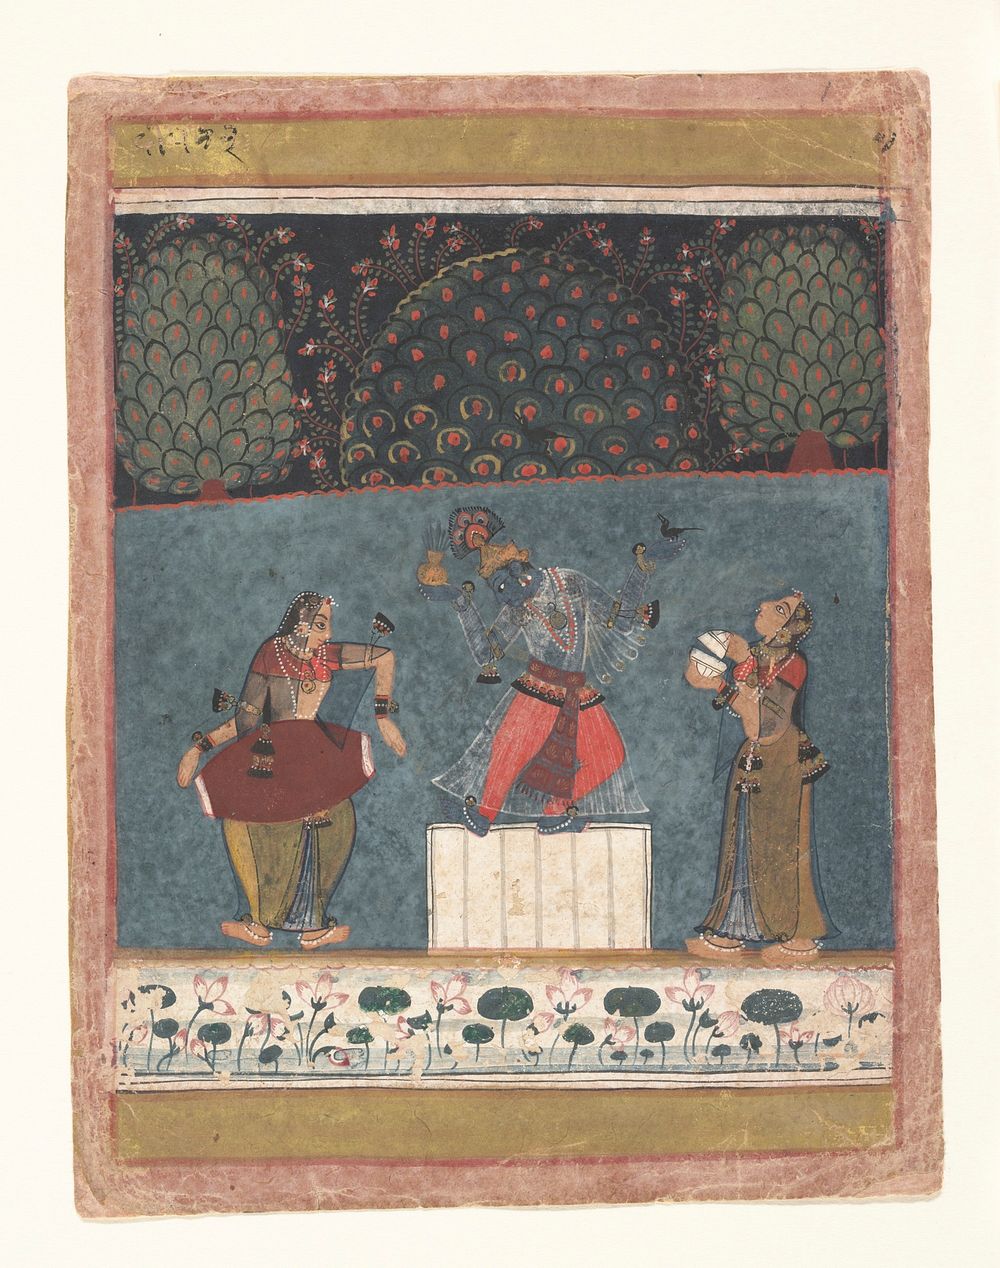 Vasant Ragini: Folio from a ragamala series (Garland of Musical Modes)